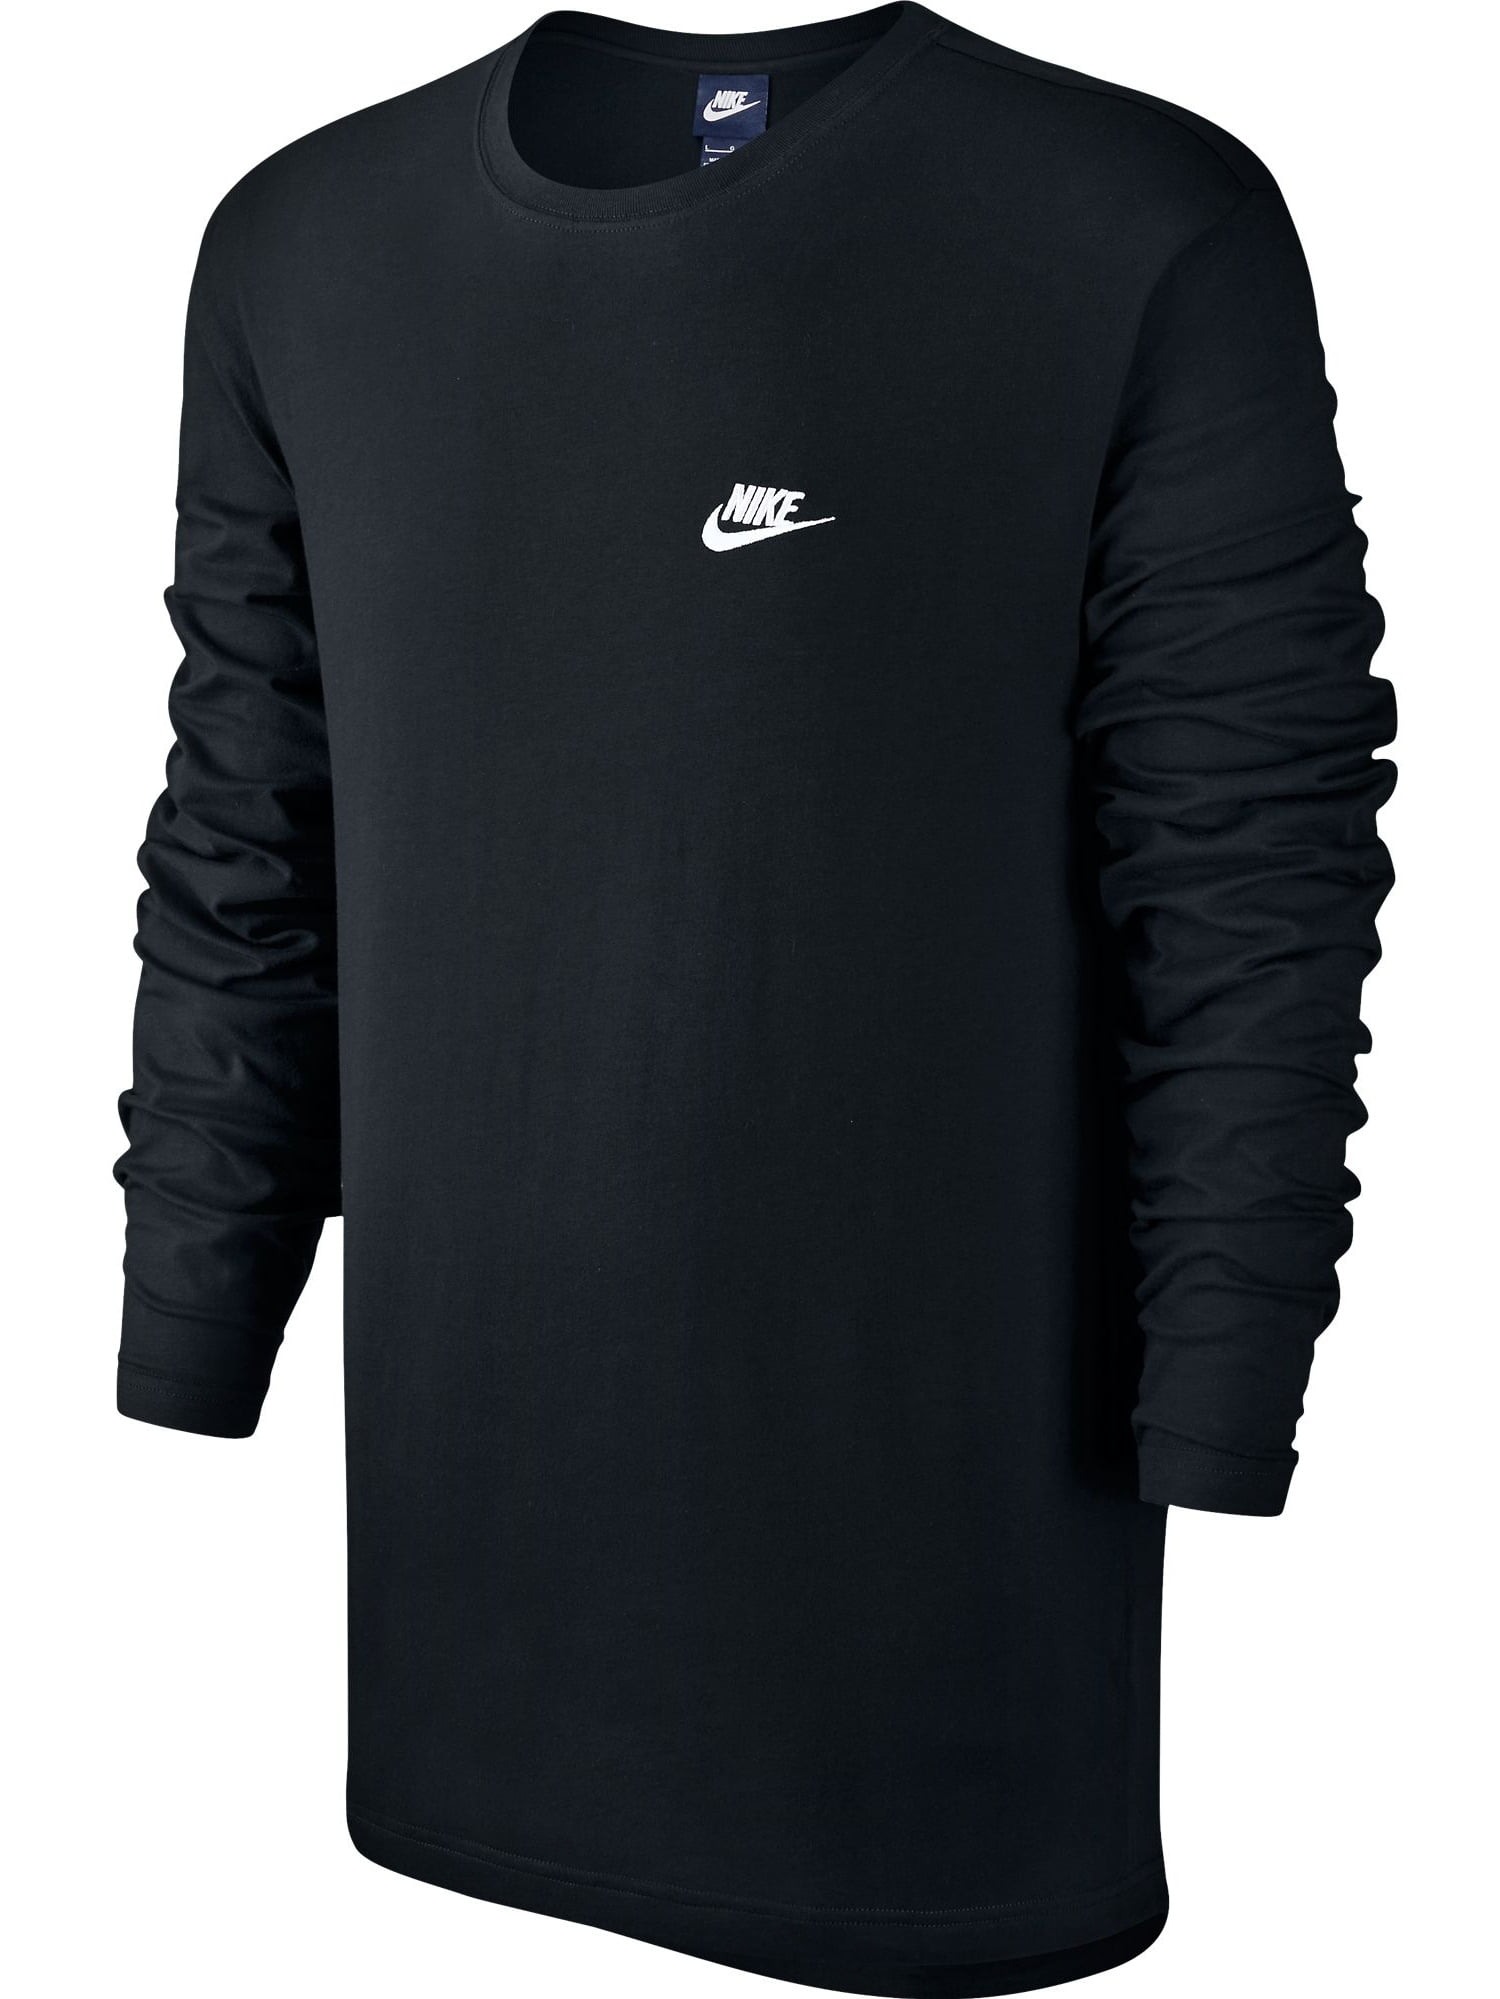 Nike Swoosh Logo Longsleeve Men's T-Shirt Black/White 804413-010 ...